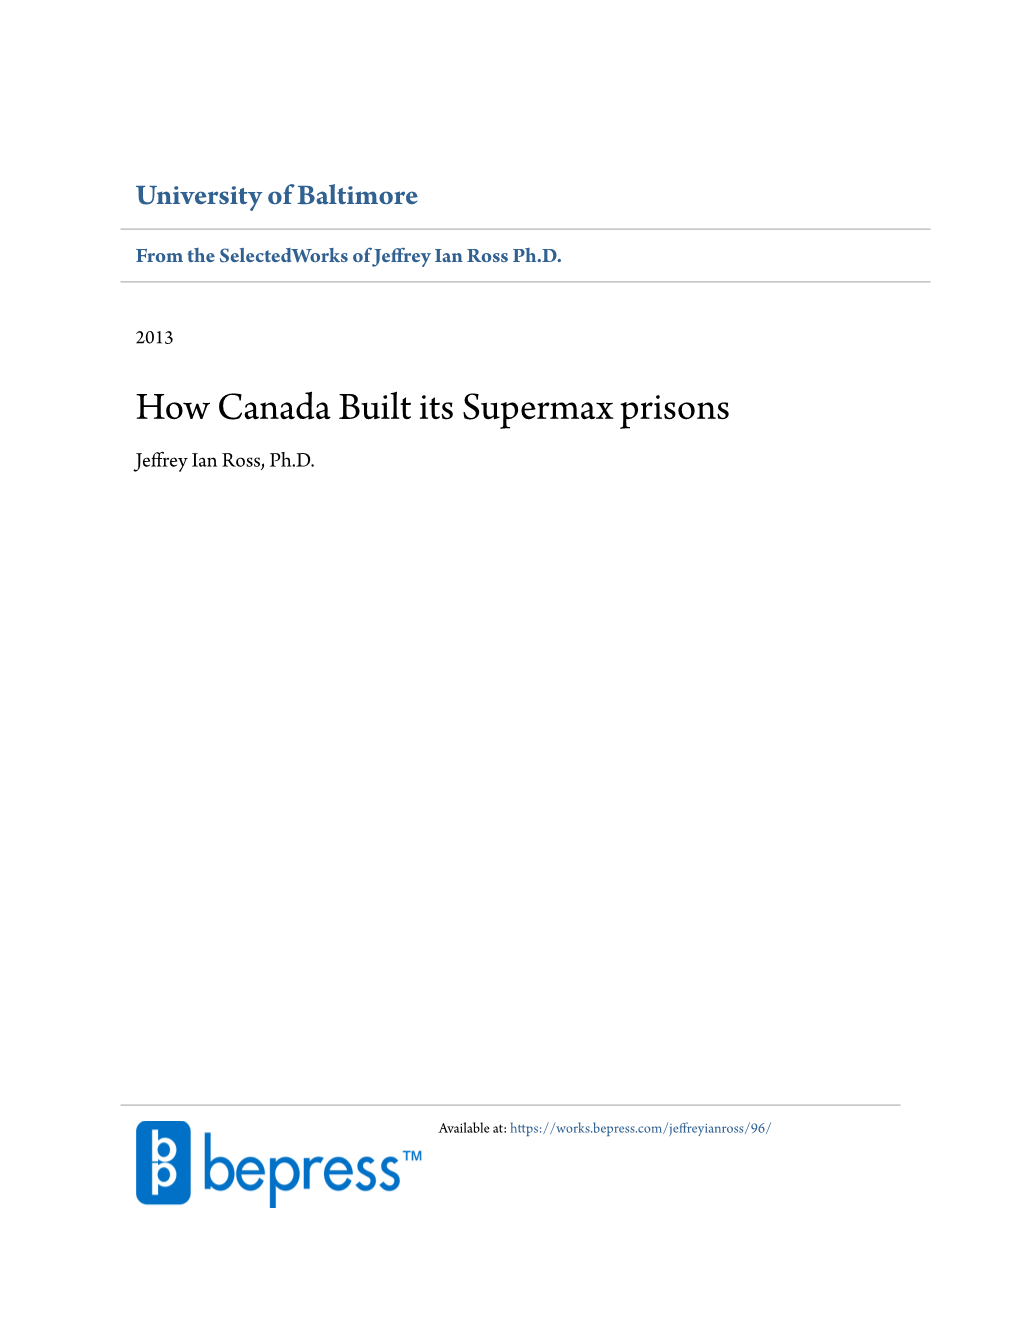 How Canada Built Its Supermax Prisons Jeffrey Ian Ross, Ph.D